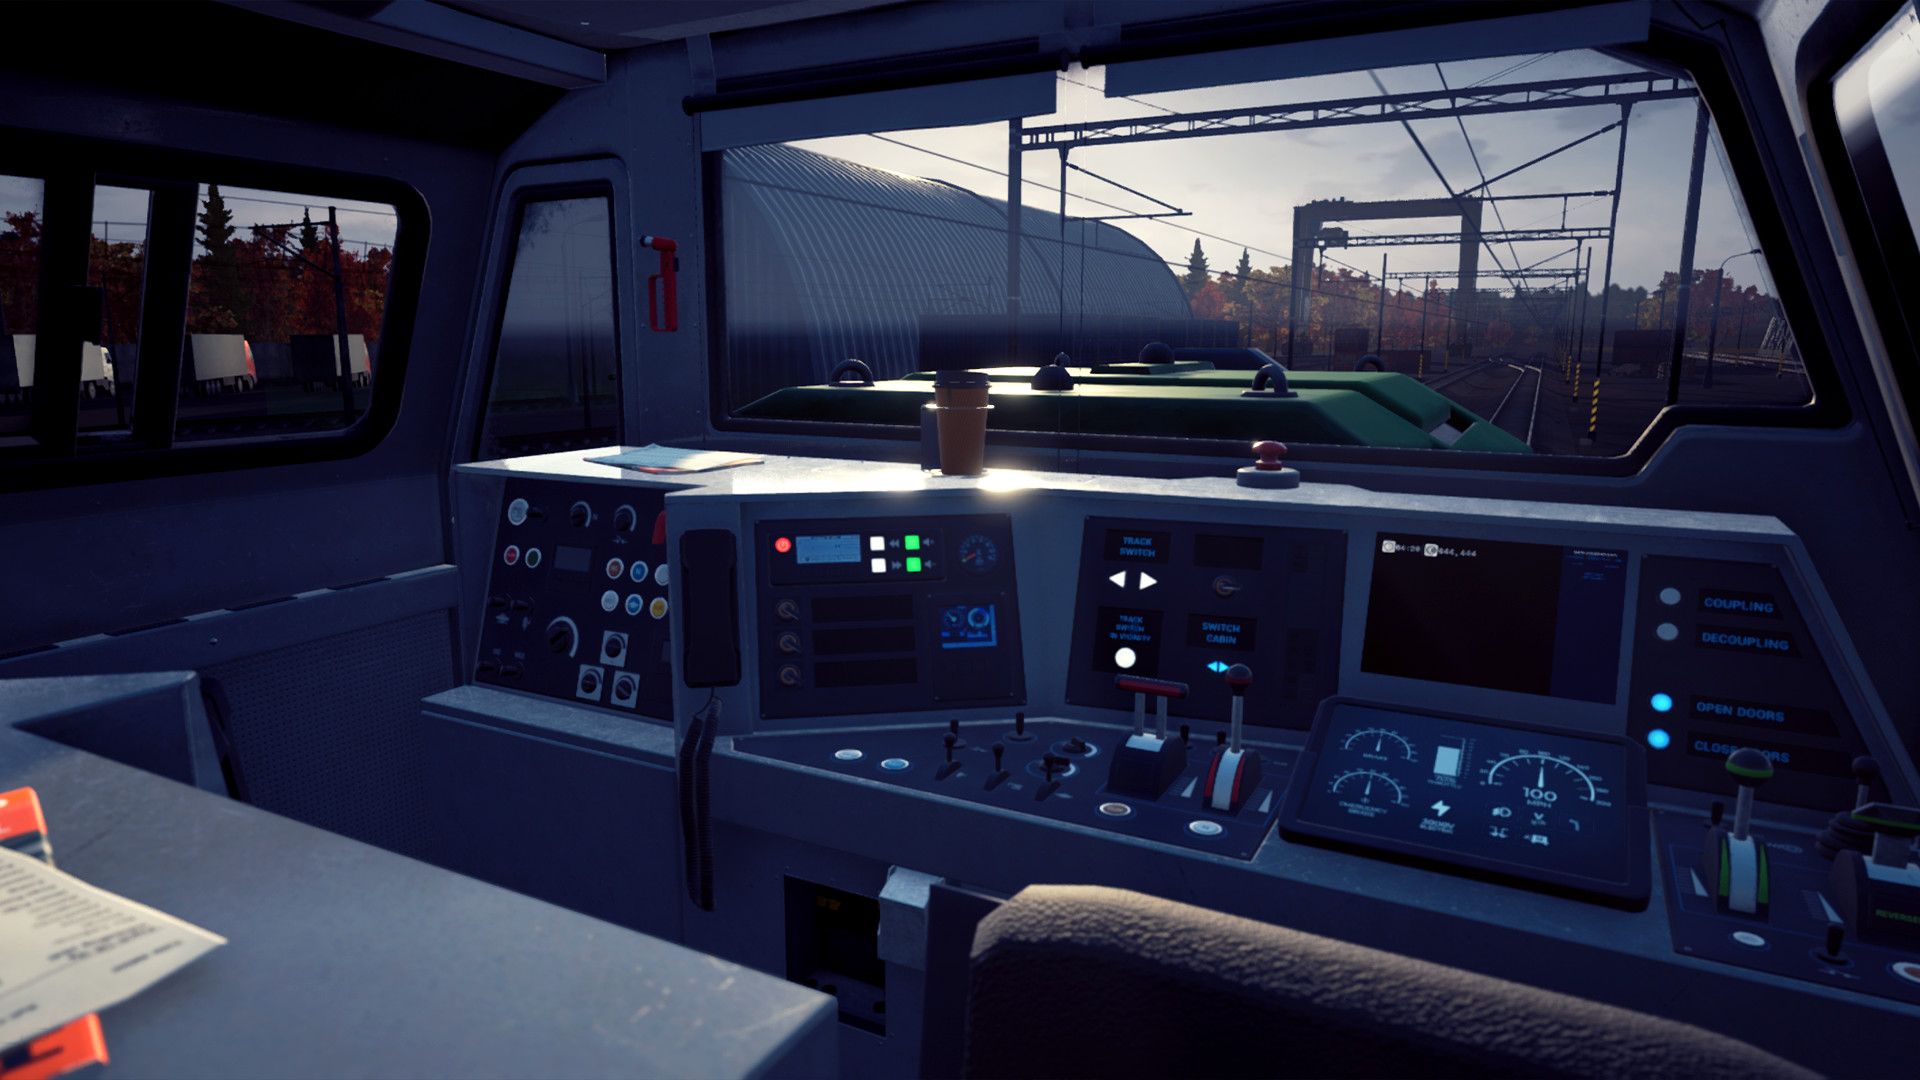 Train Life: A Railway Simulator Steam Account, 4.52 usd